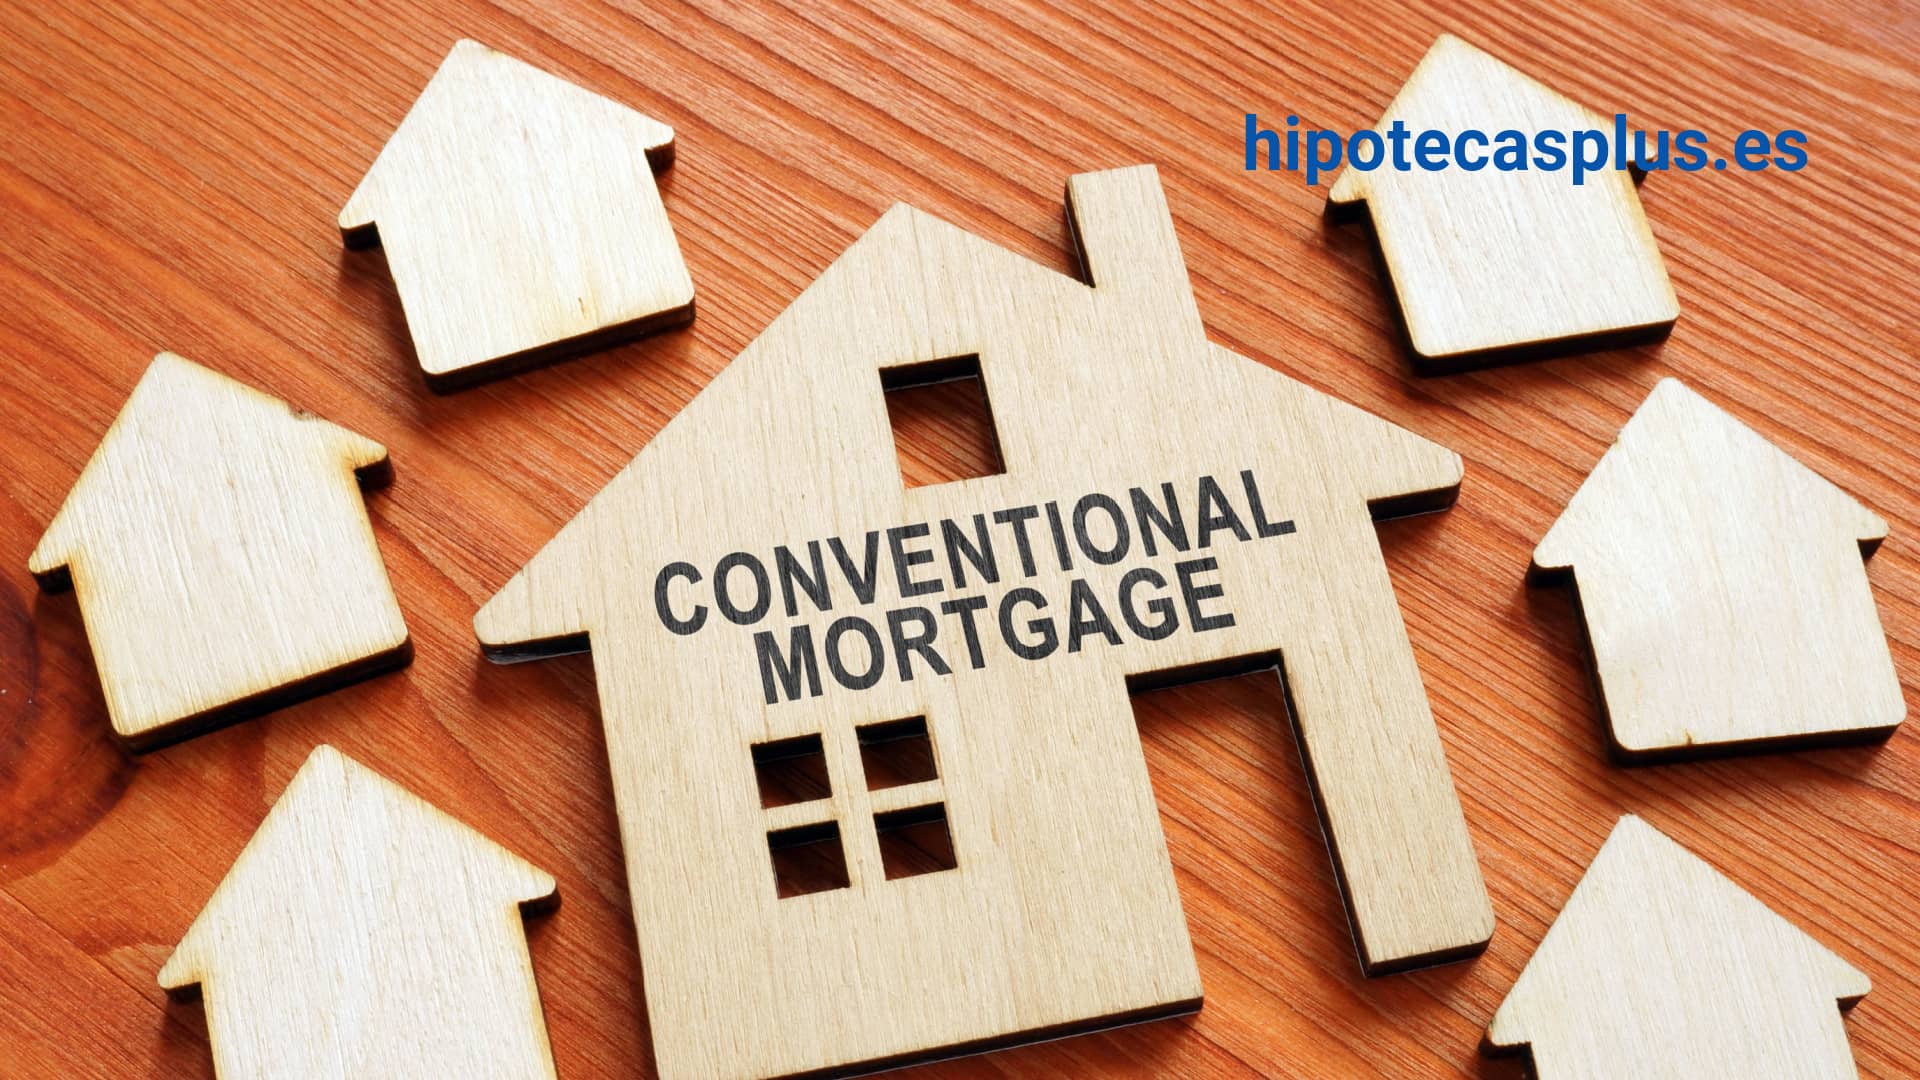 https://www.hipotecasplus.es/wp-content/uploads/HipotecasPlus-Conventional-Mortgage-.jpg